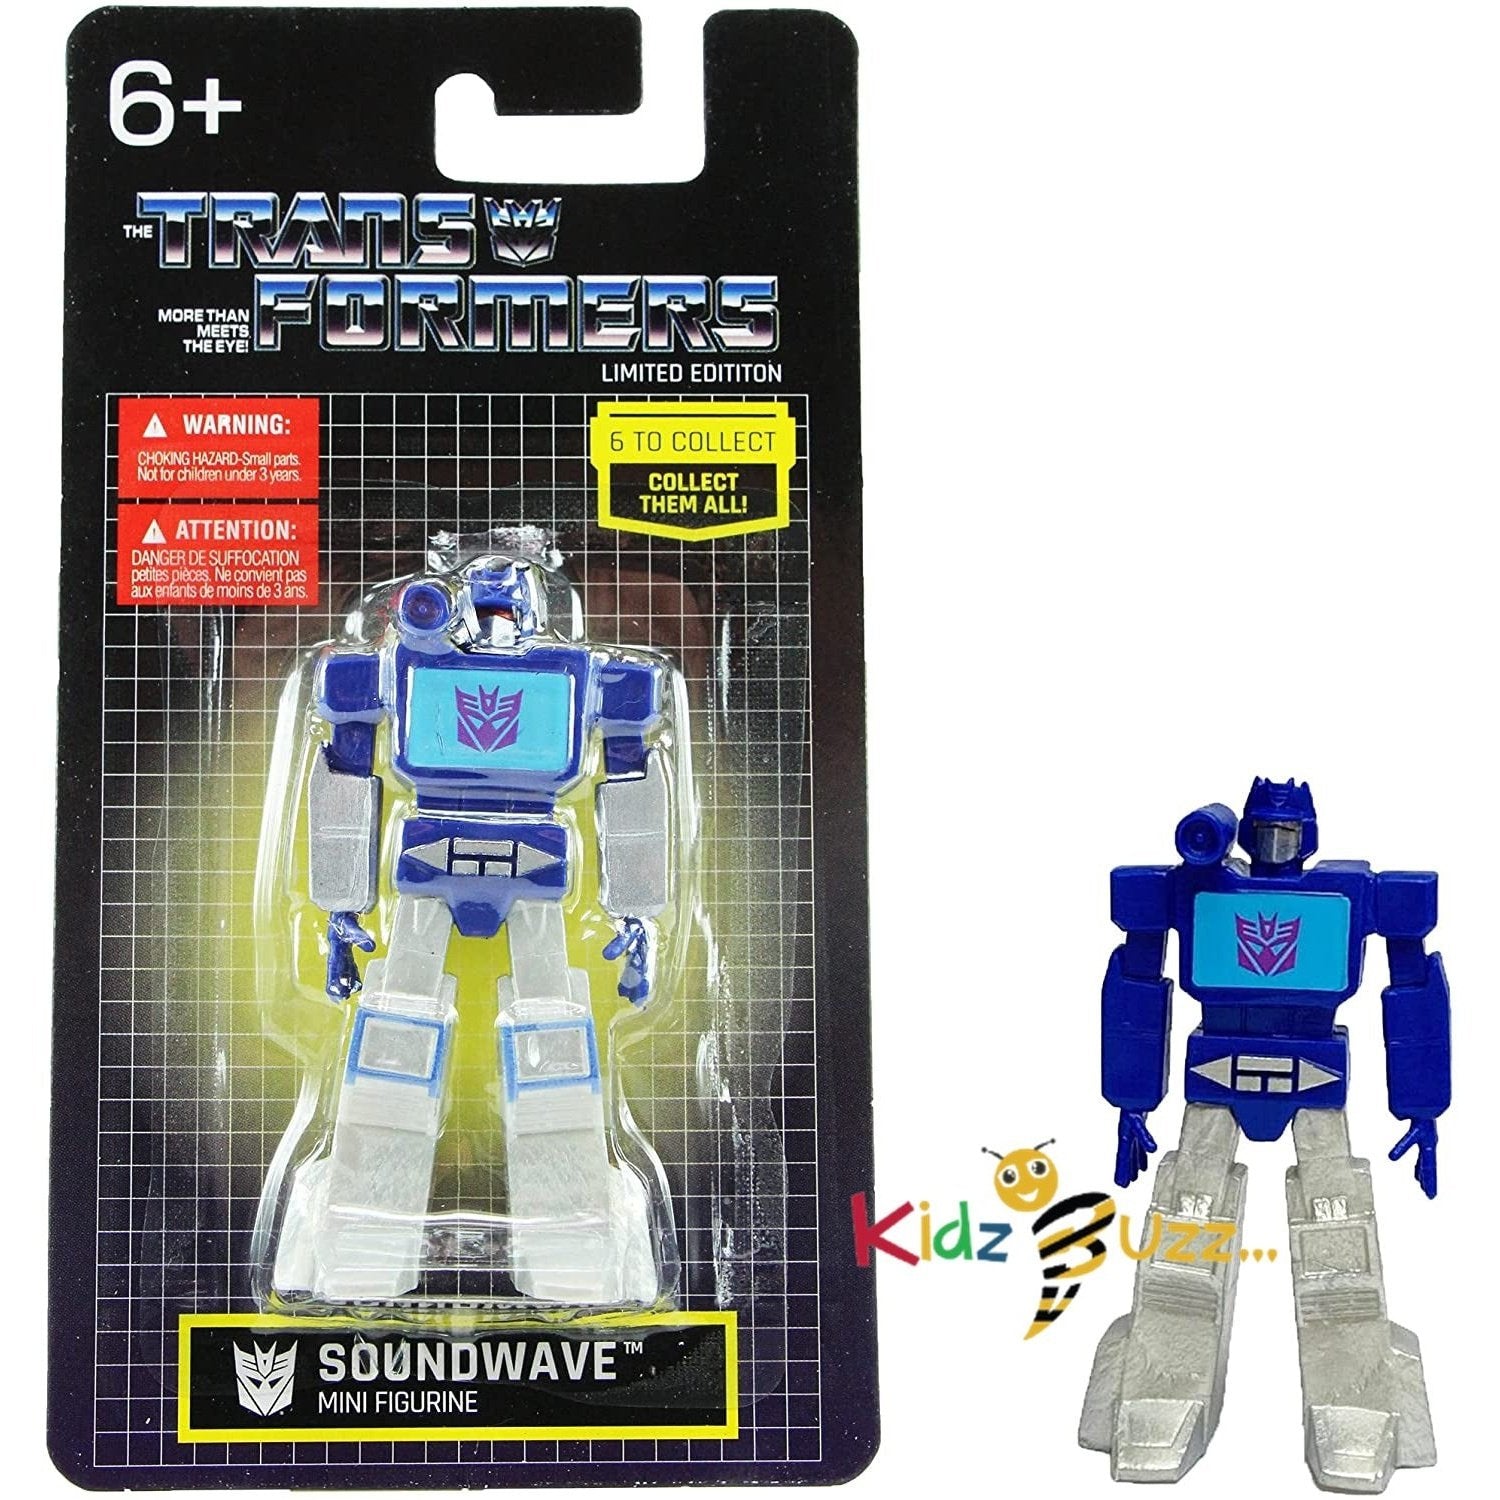 Limited Edition Original Transformers 2.5" Mini Figure Soundwave